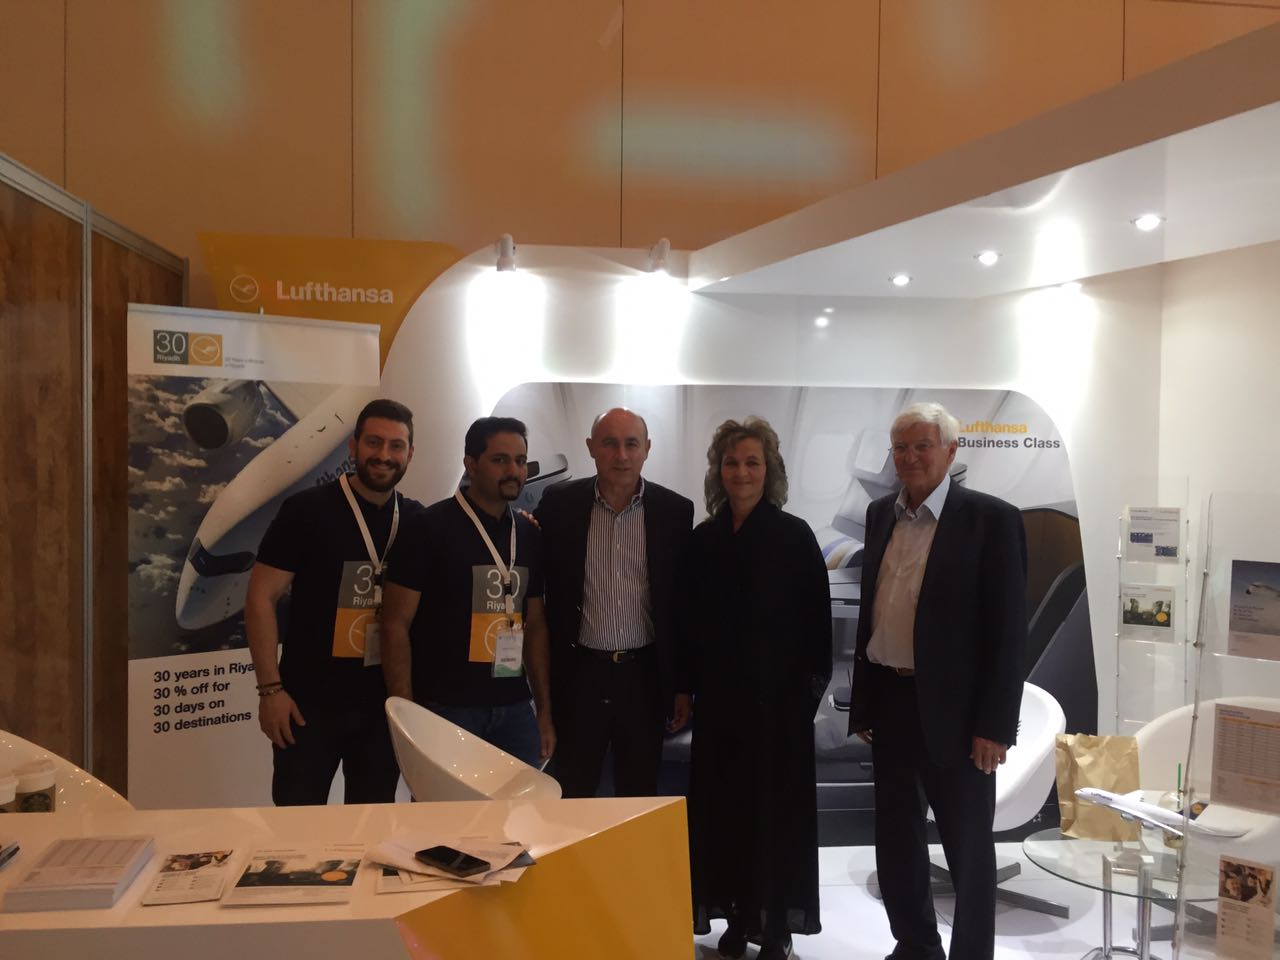 Lindauer Reisebüro at the Riyadh Travel Fair 2017 with Lufthansa and the German ambassador Mr Heller